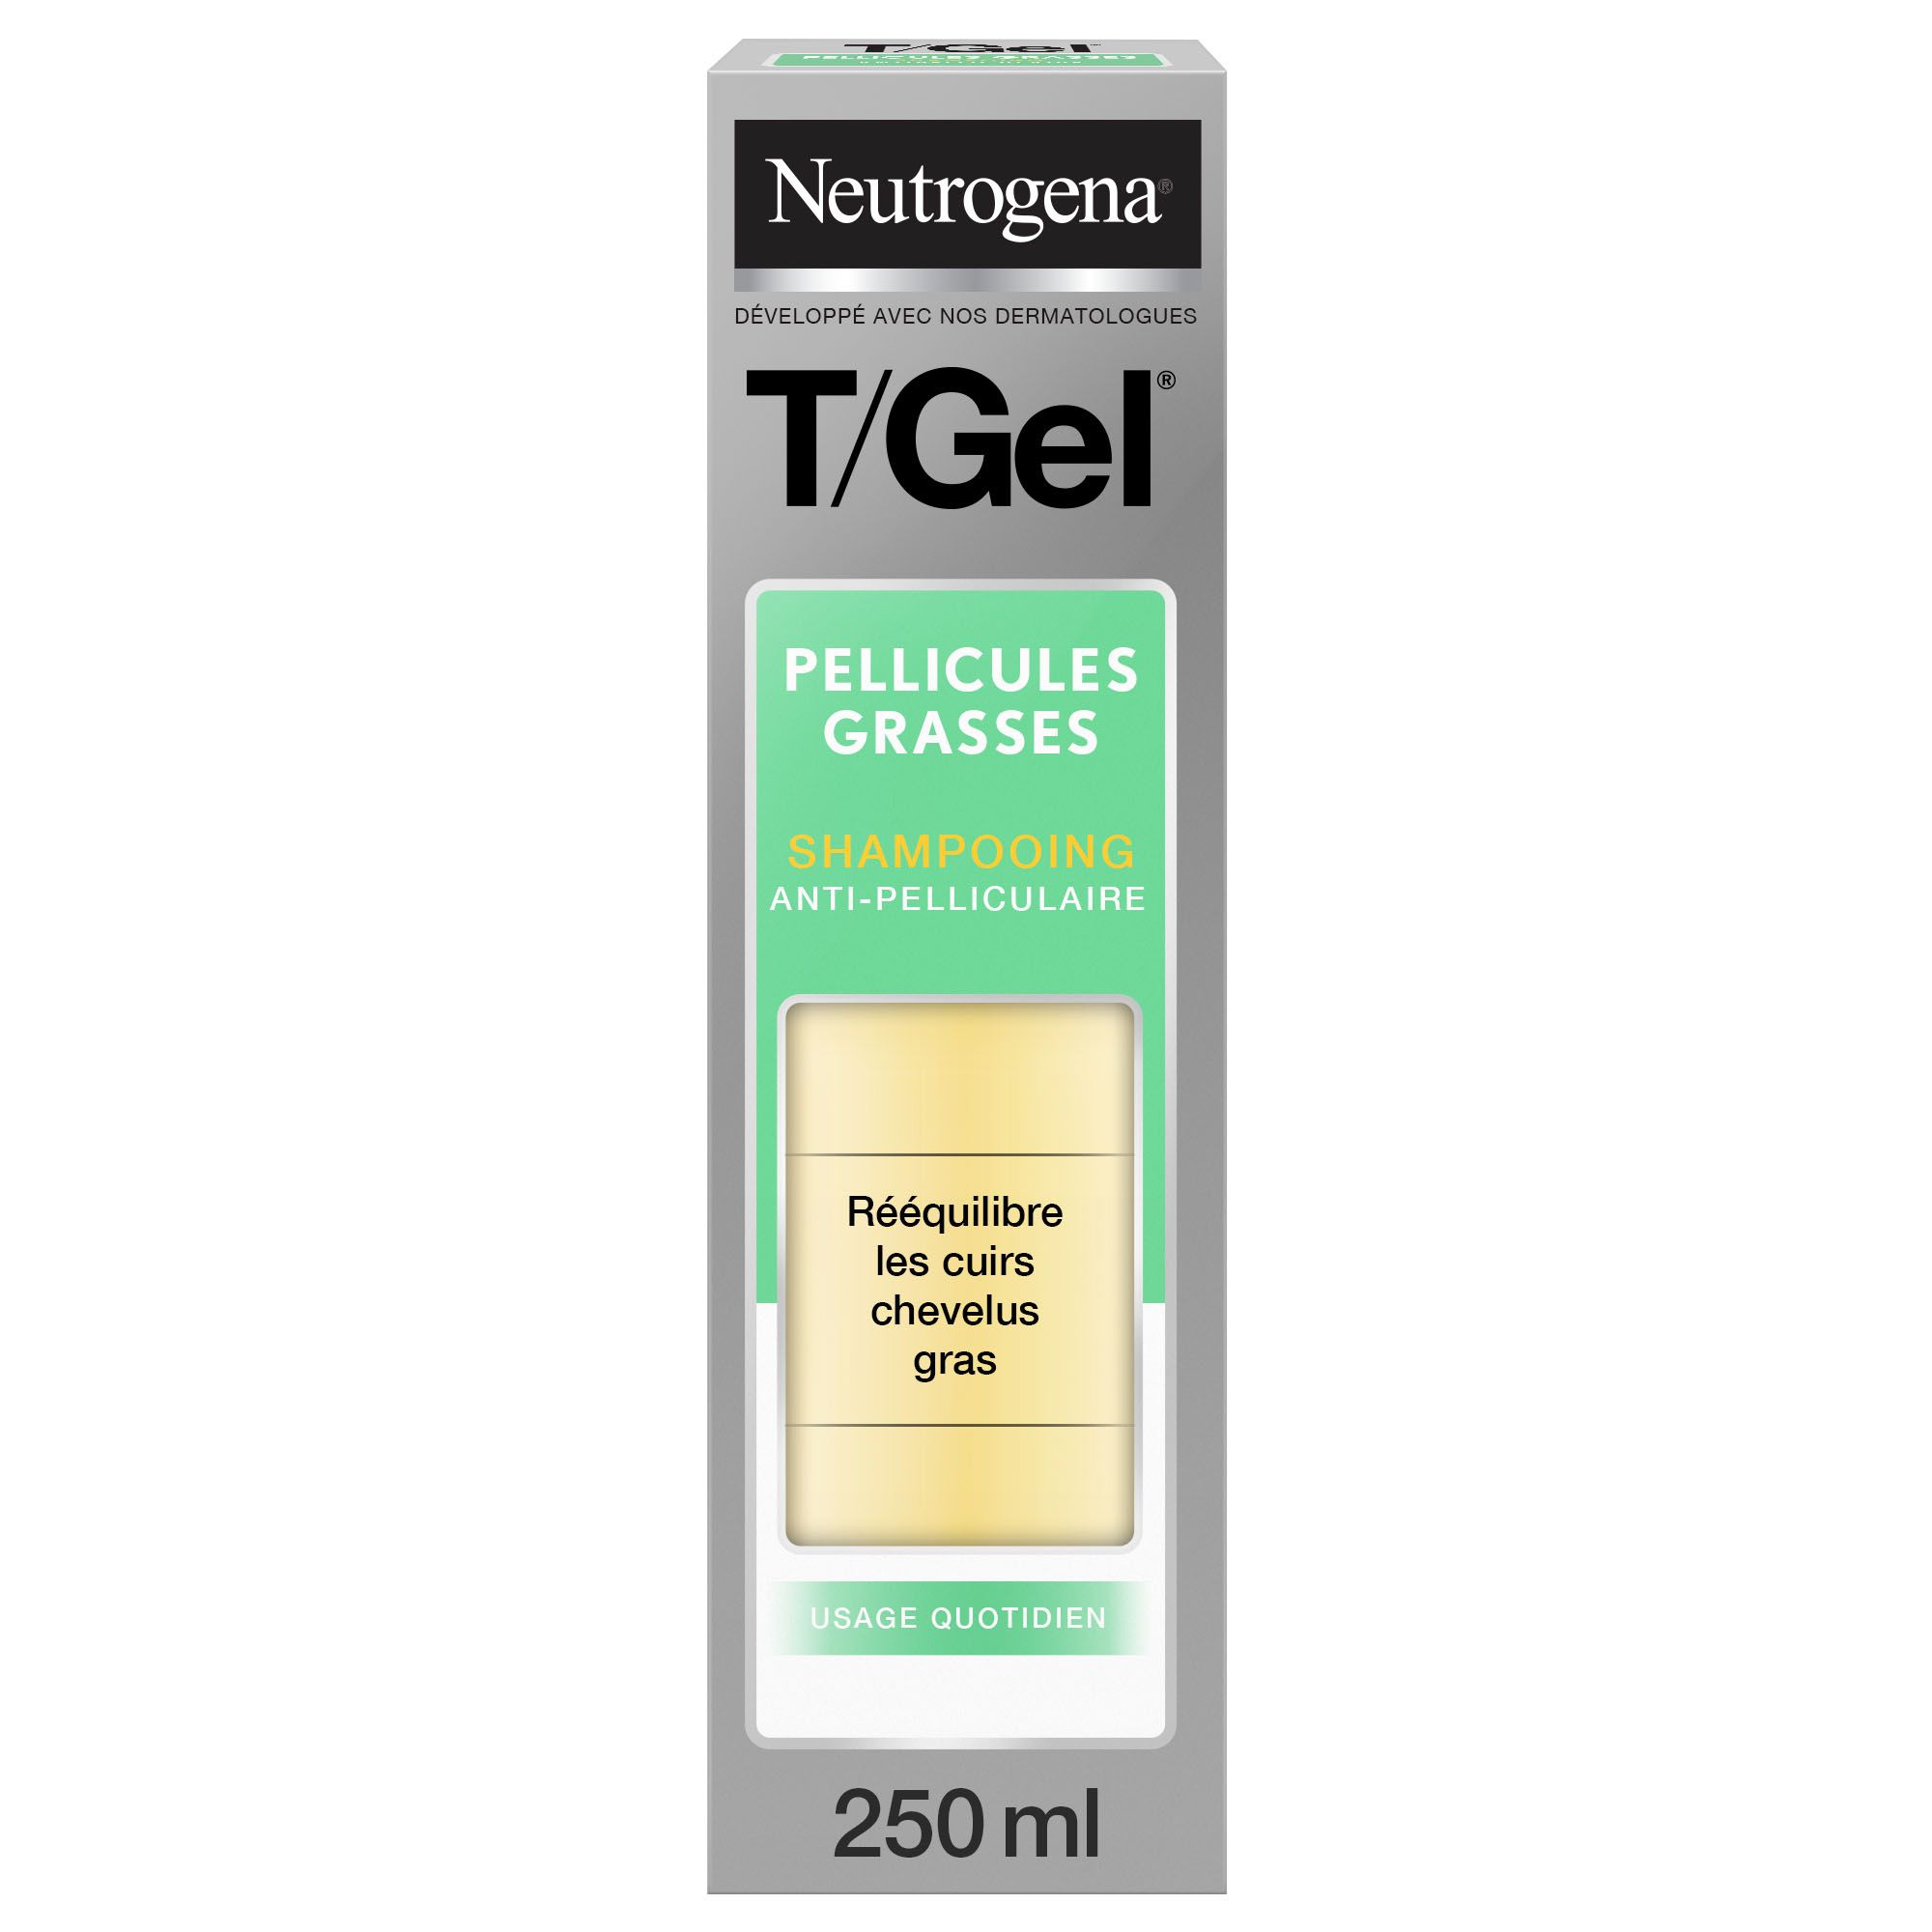 Neutrogena, T/Gel, Shampoing Pellicules Grasses 250 ml